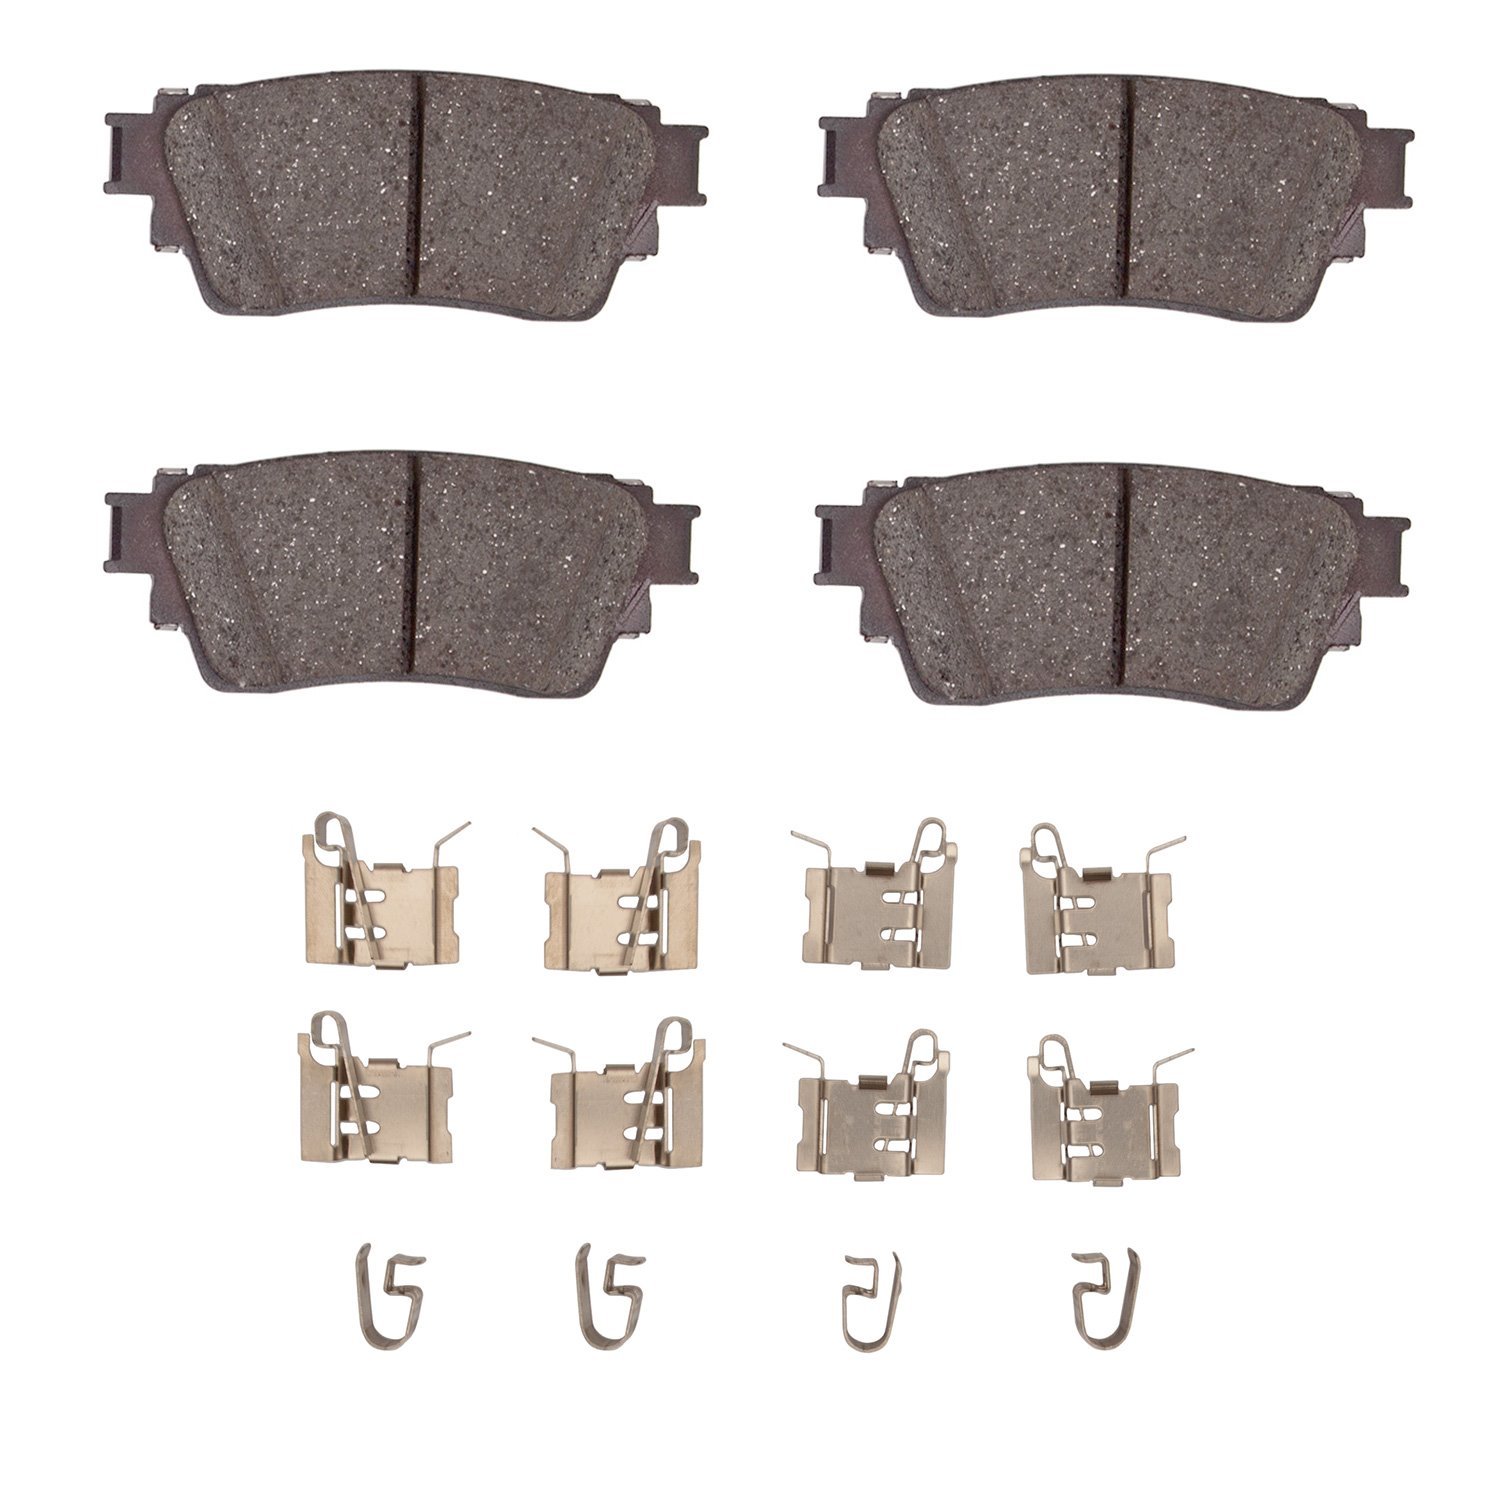 Optimum OE Brake Pads & Hardware Kit, Fits Select Fits Multiple Makes/Models, Position: Rear